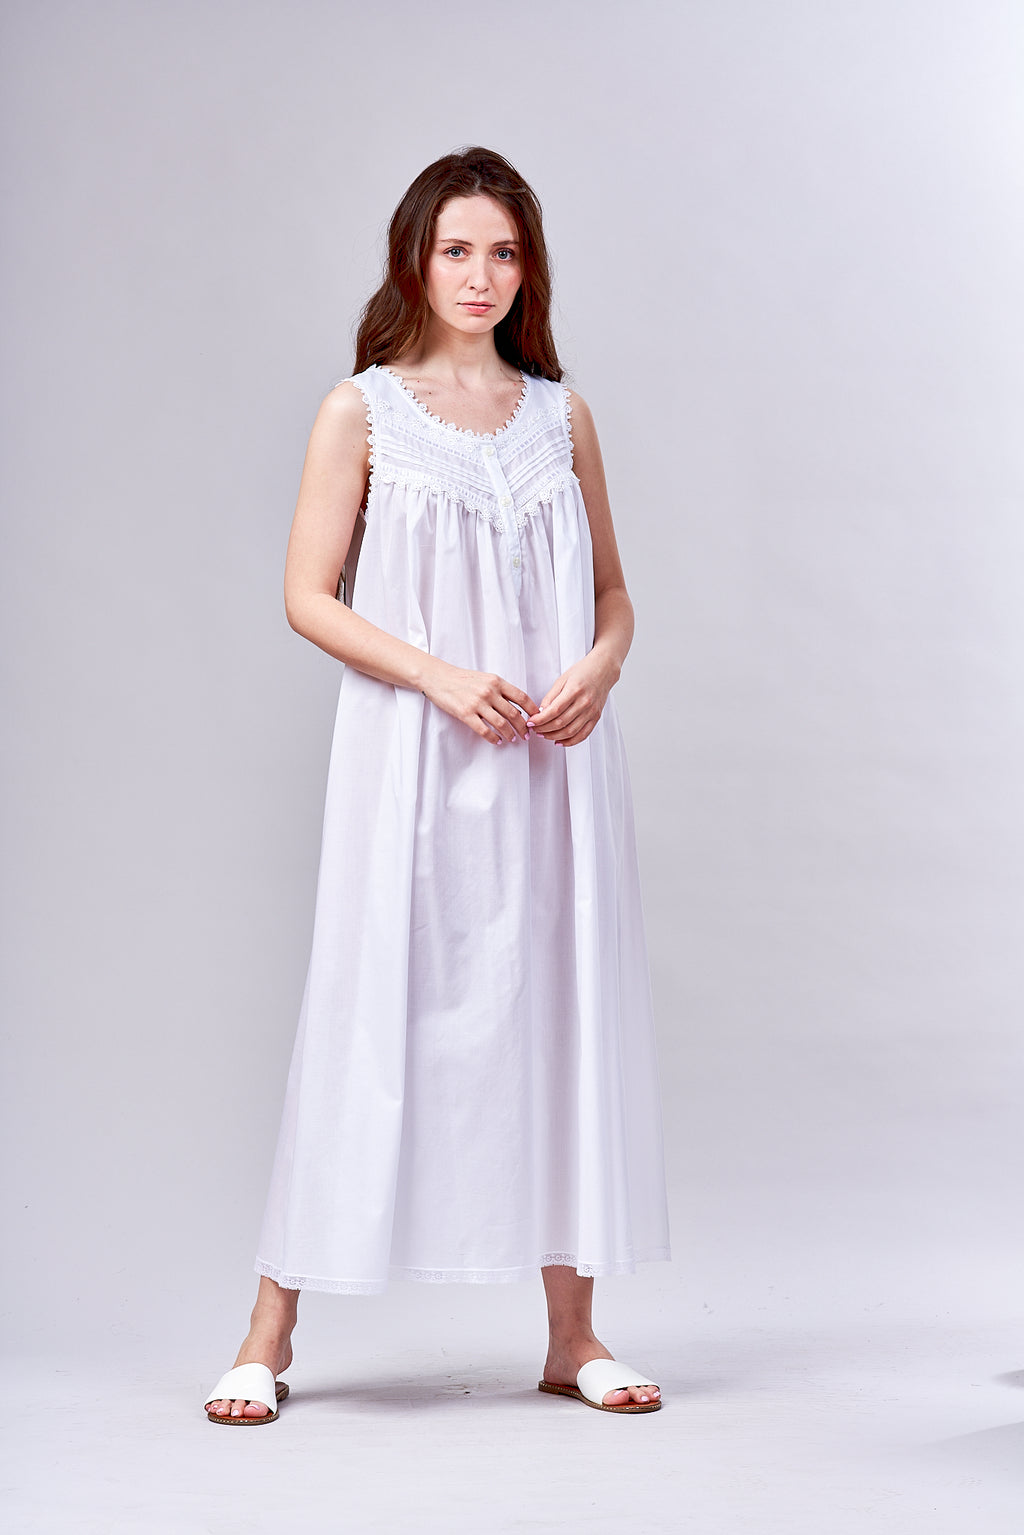 Priamo: US Made Luxury Nightgowns, Robes, & Pajamas for Women